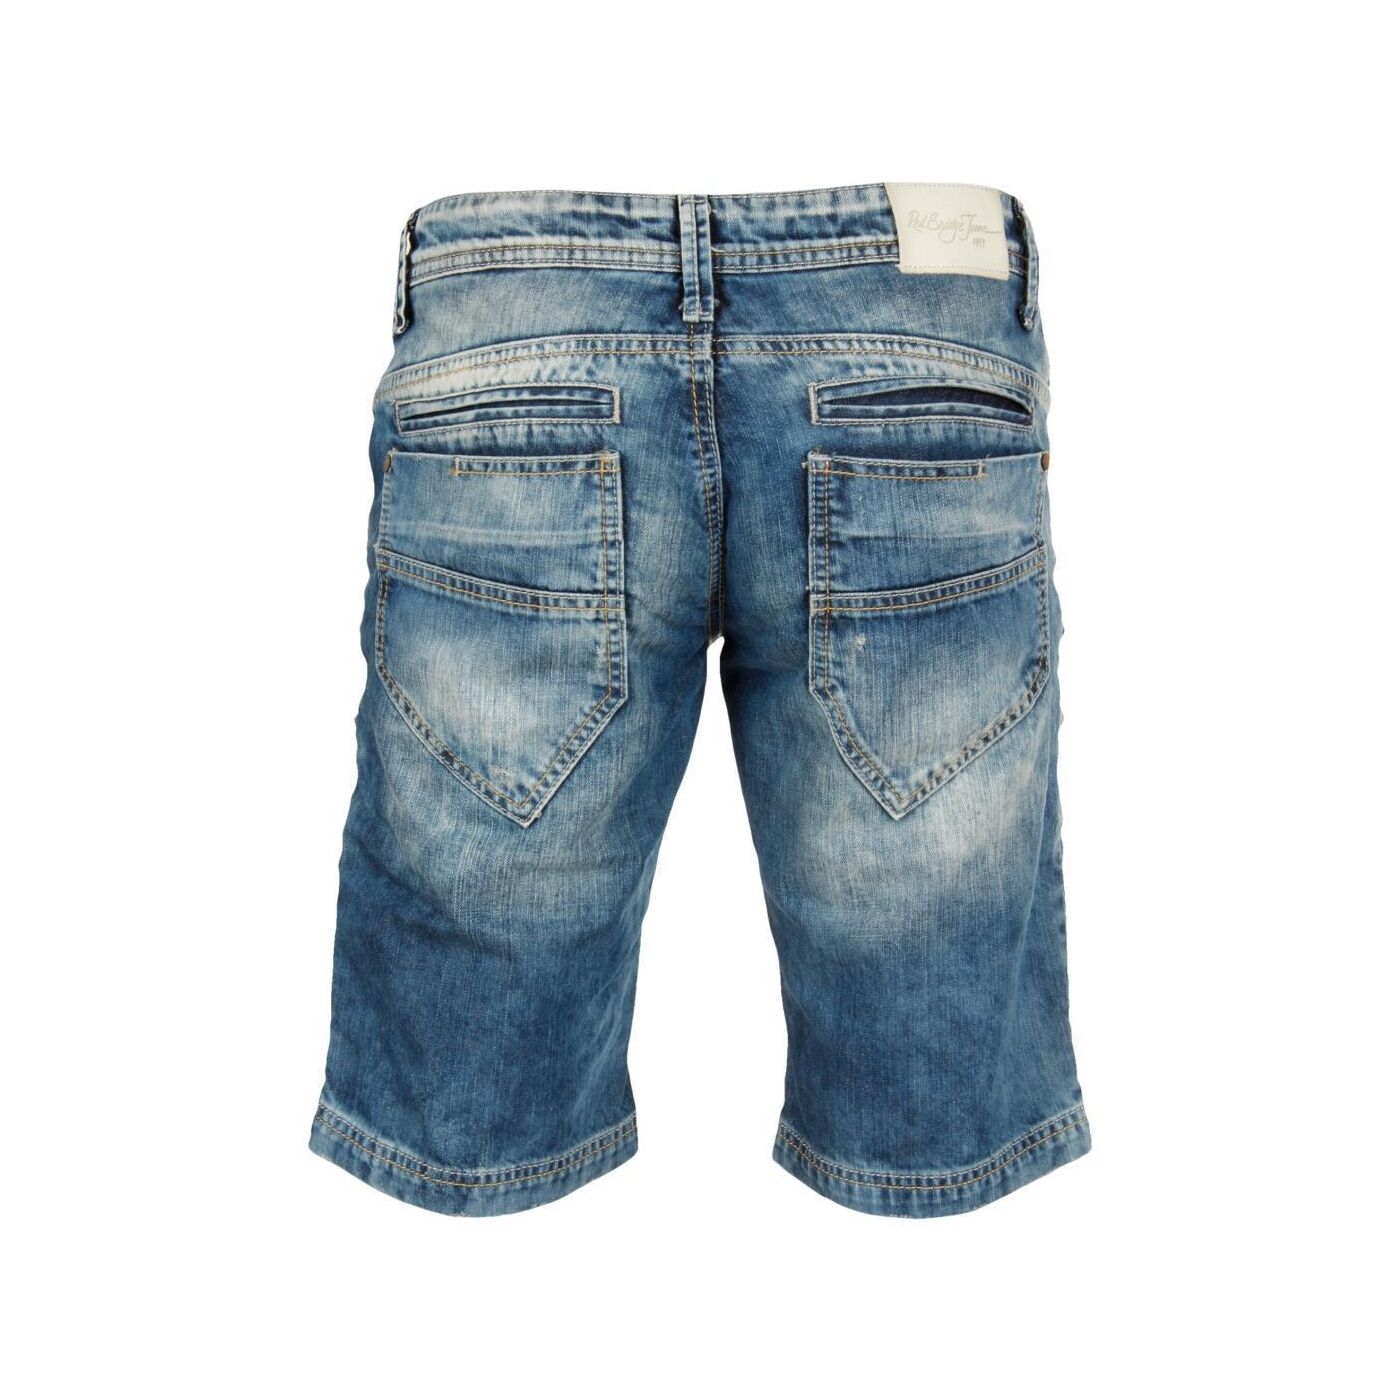 Red Bridge Men Keep Back Jeans Shorts pant blue-R-31151-denim - Redbr, €  29,90